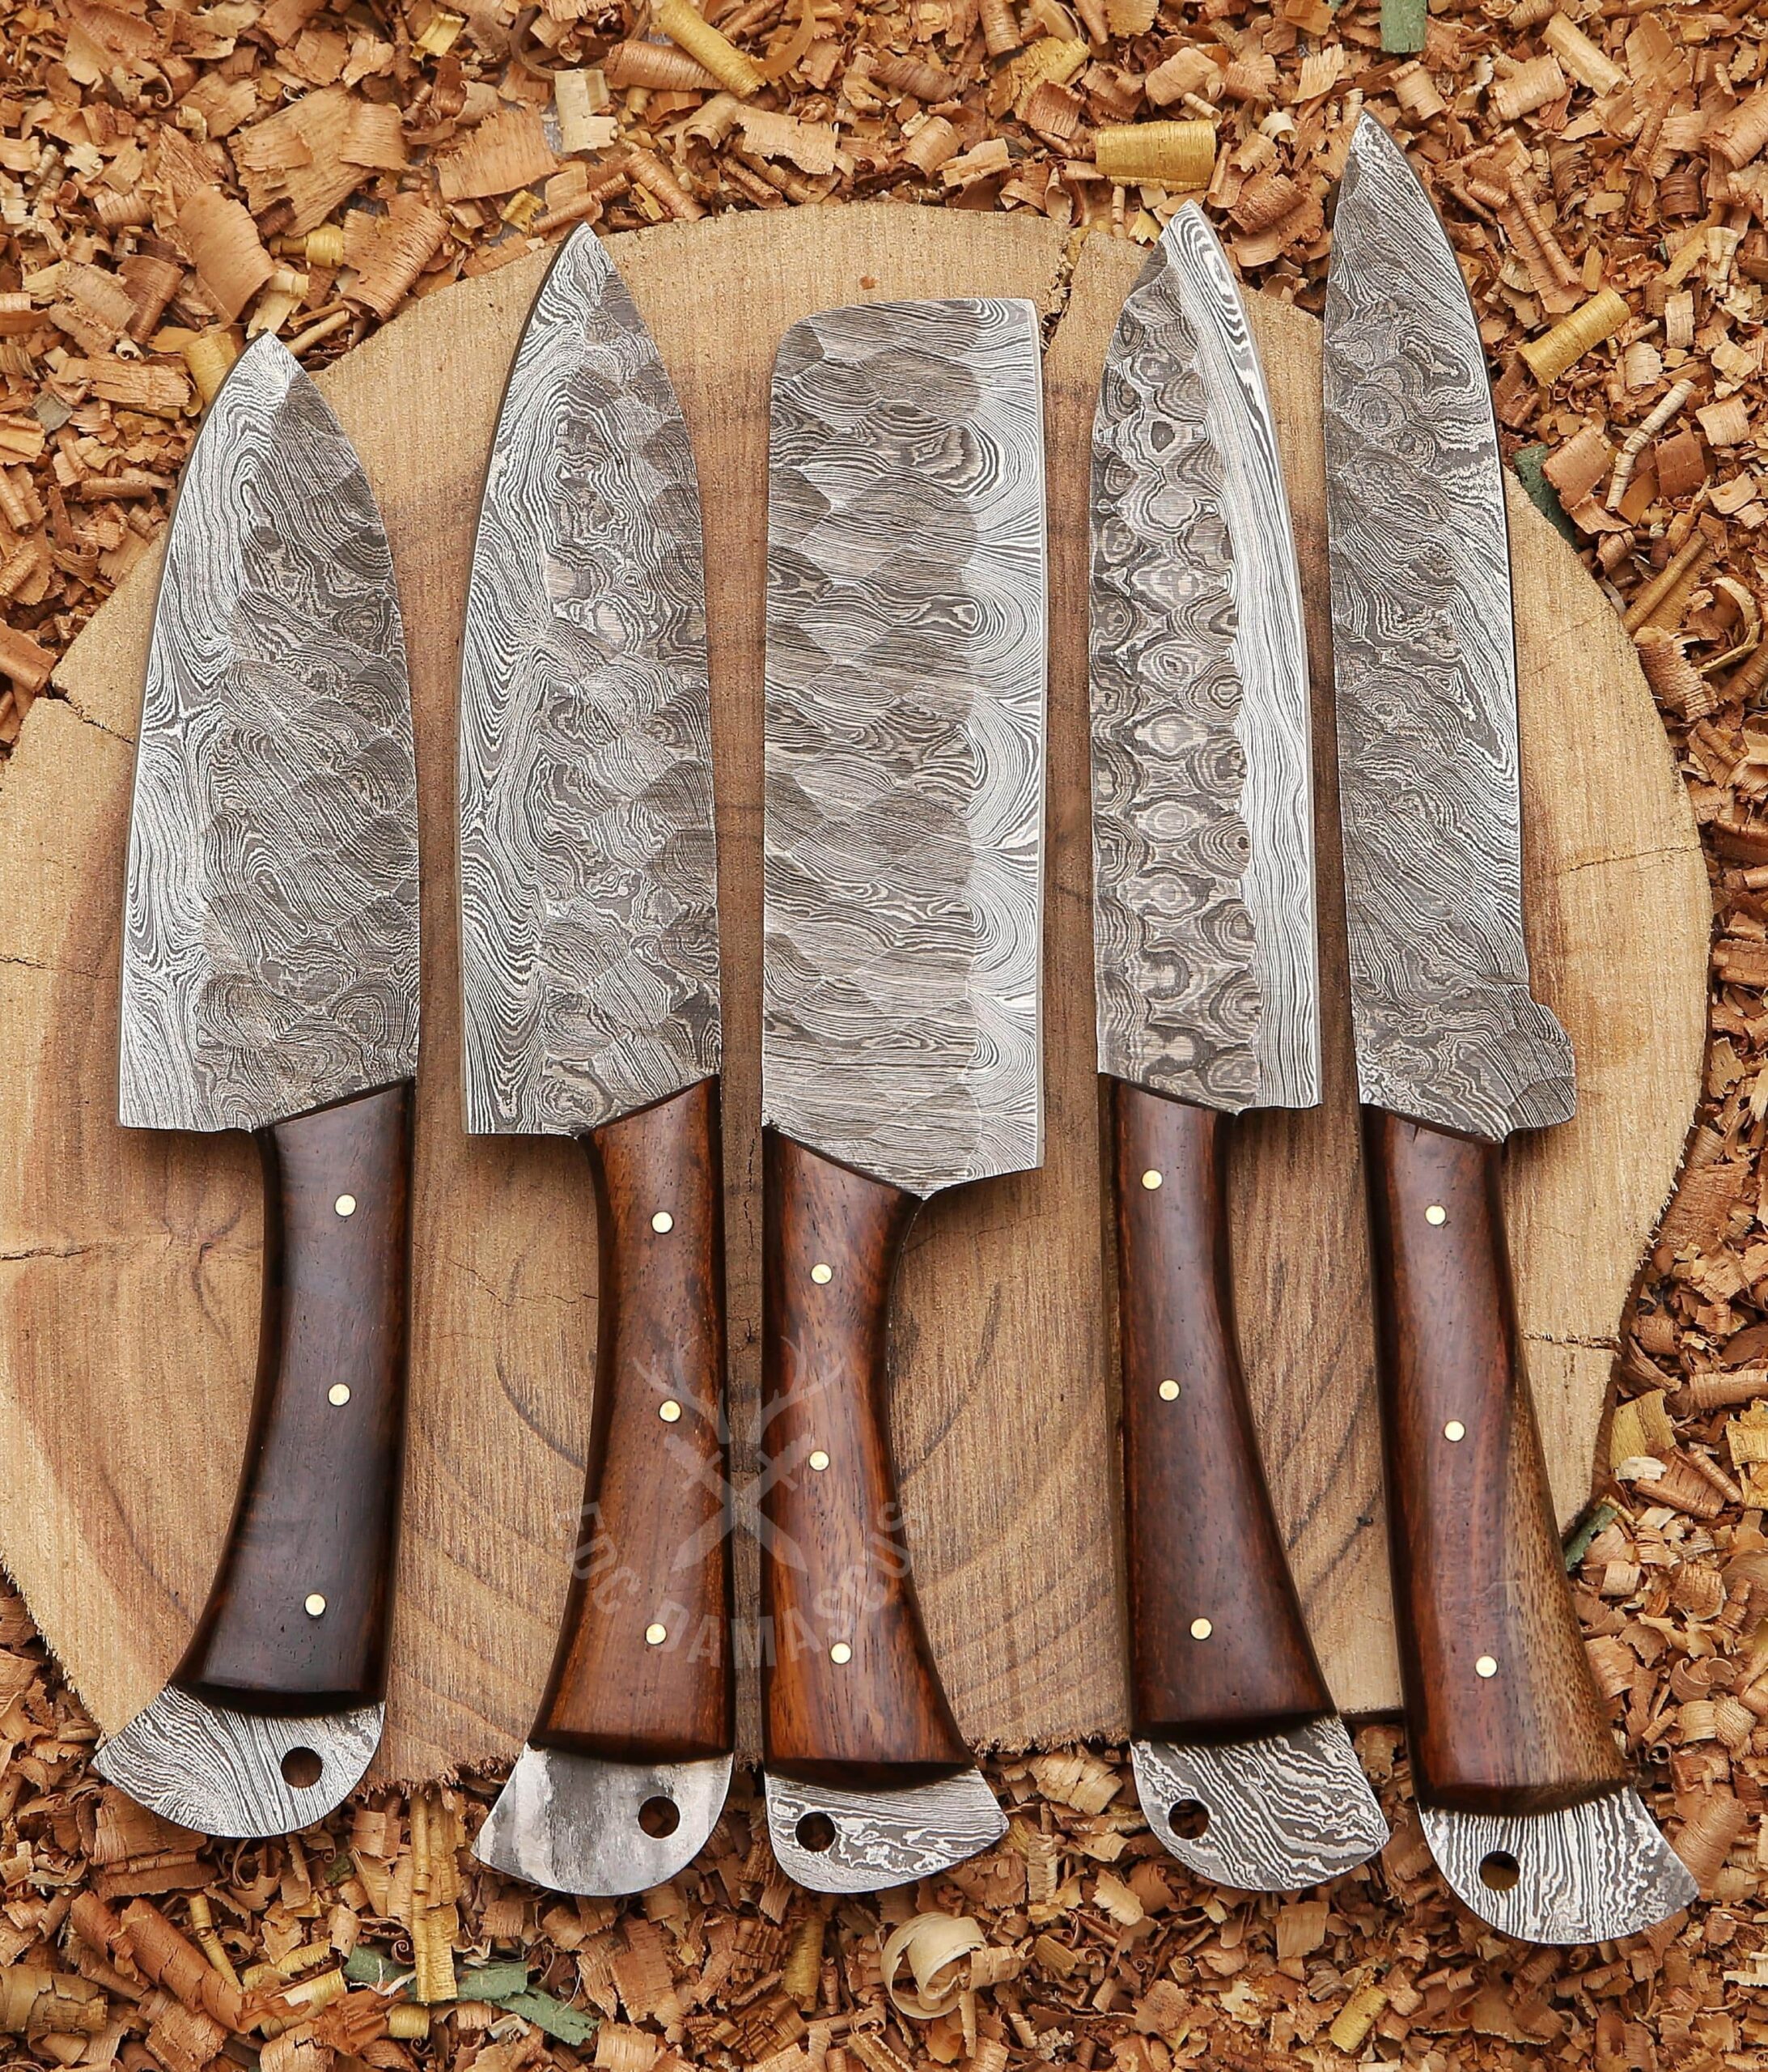 Damascus Knife Set Hand Forged Chef Knife Set, Kitchen Knives Set